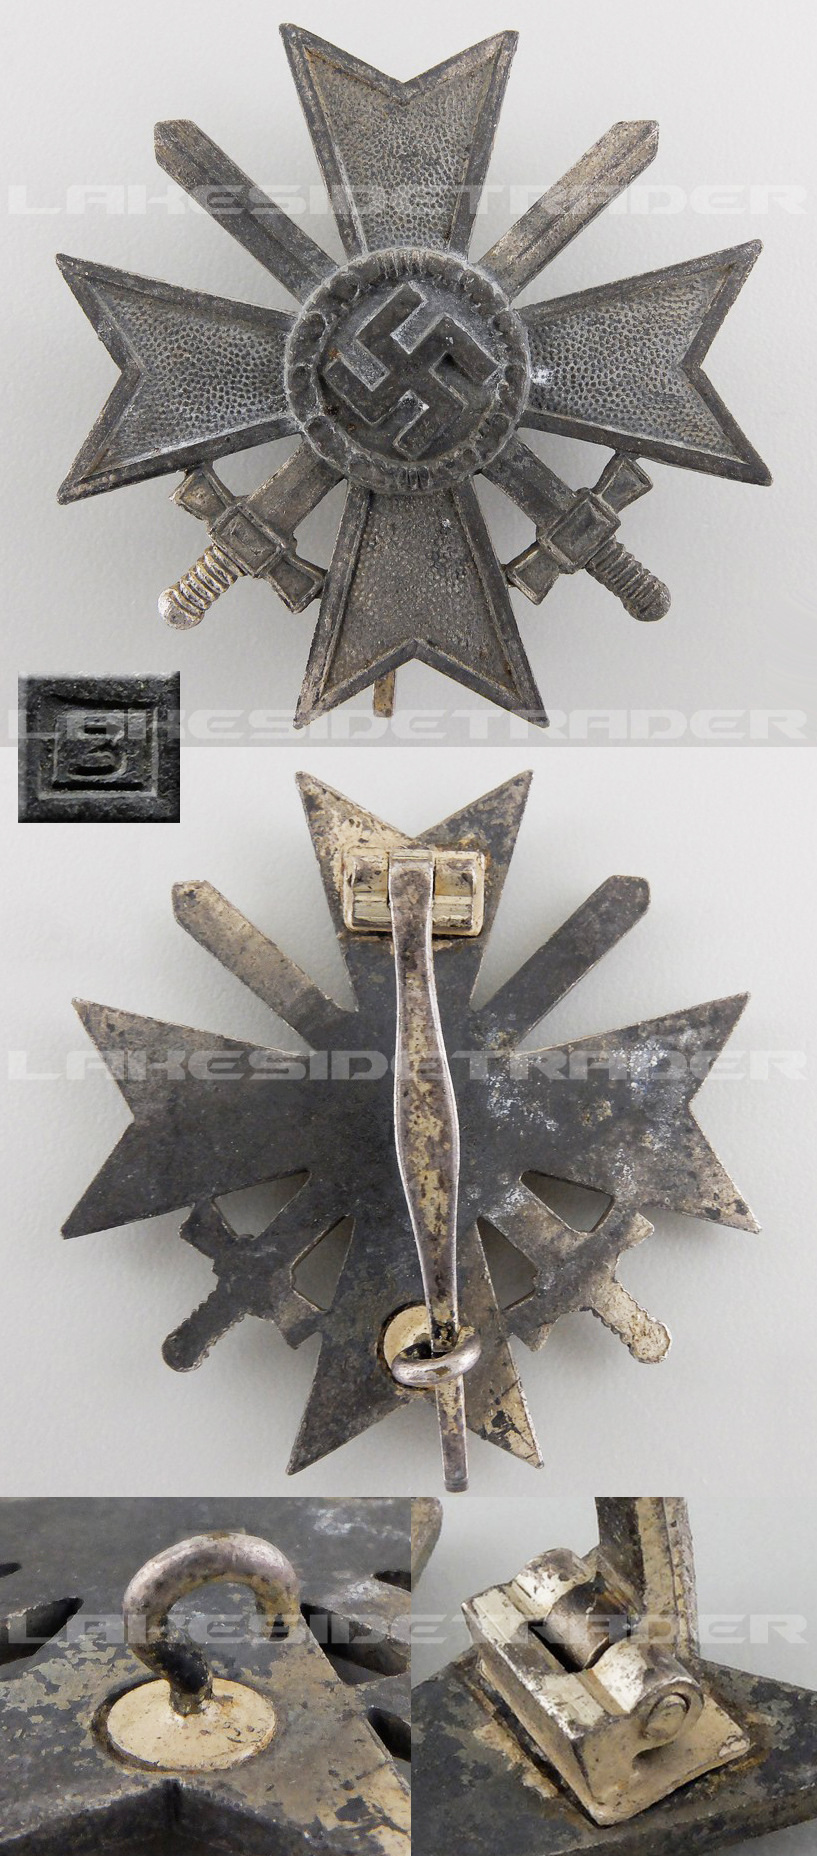 1st Class War Merit Cross with Swords by 3